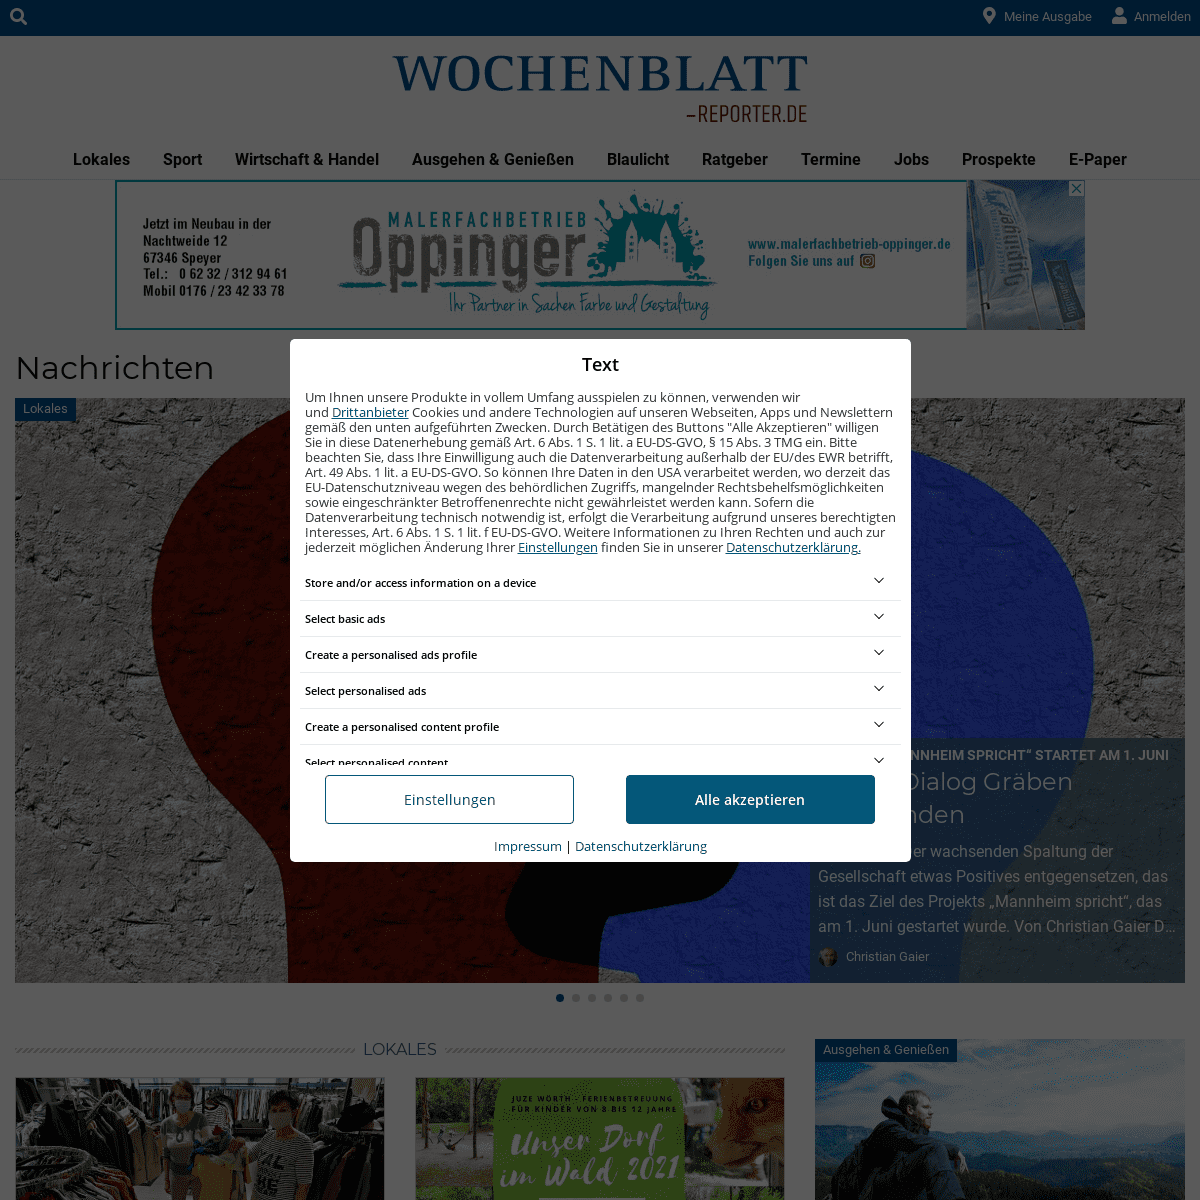 A complete backup of https://wochenblatt-reporter.de